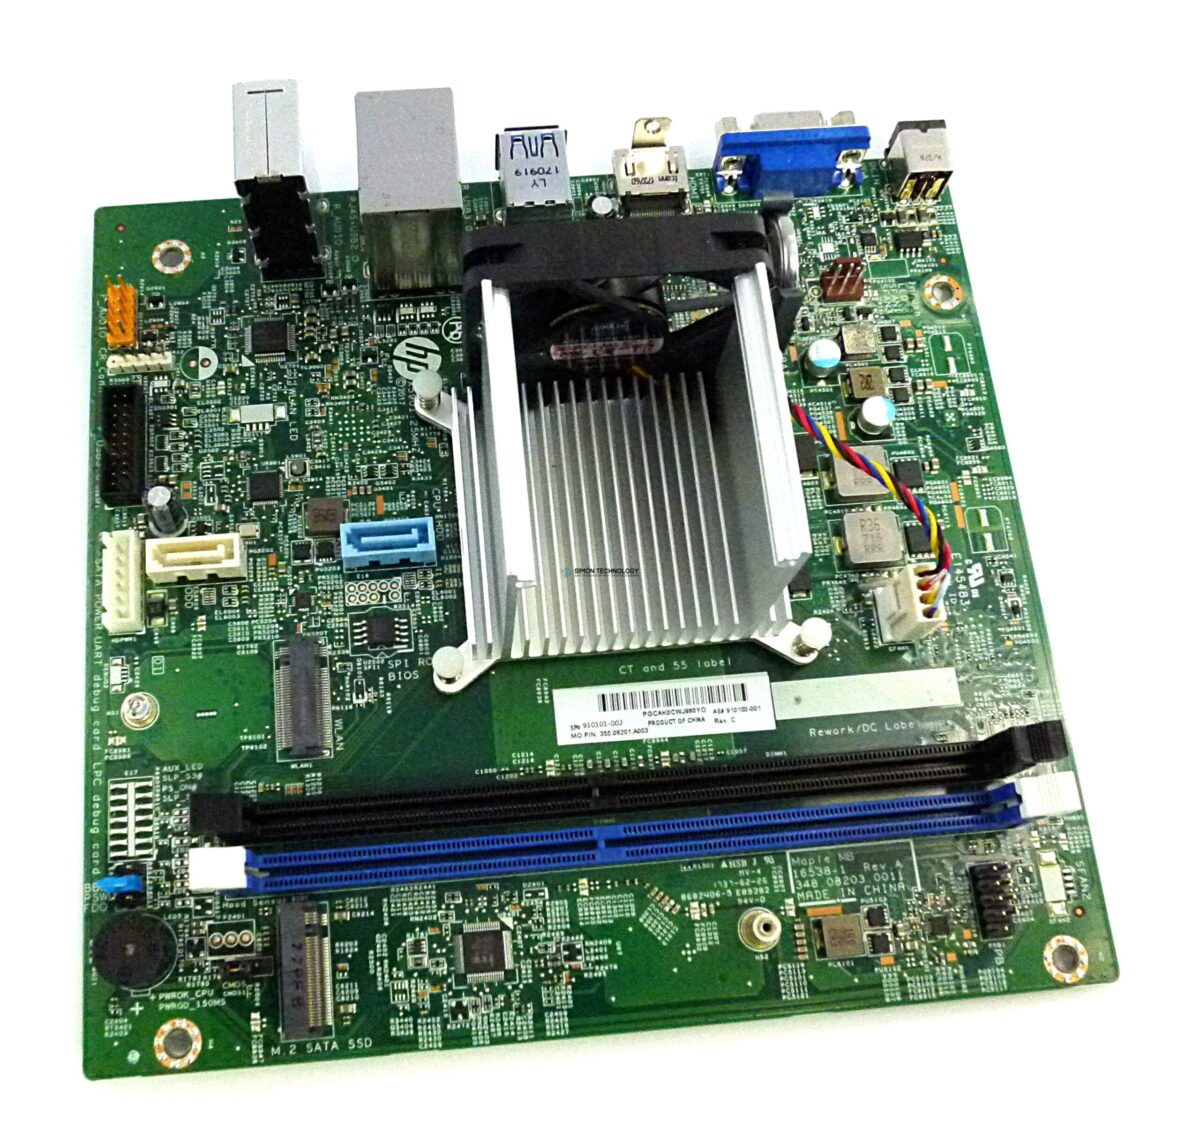 HPI MBD Maple-A9 AMD Stoney Ridge (910101-002)